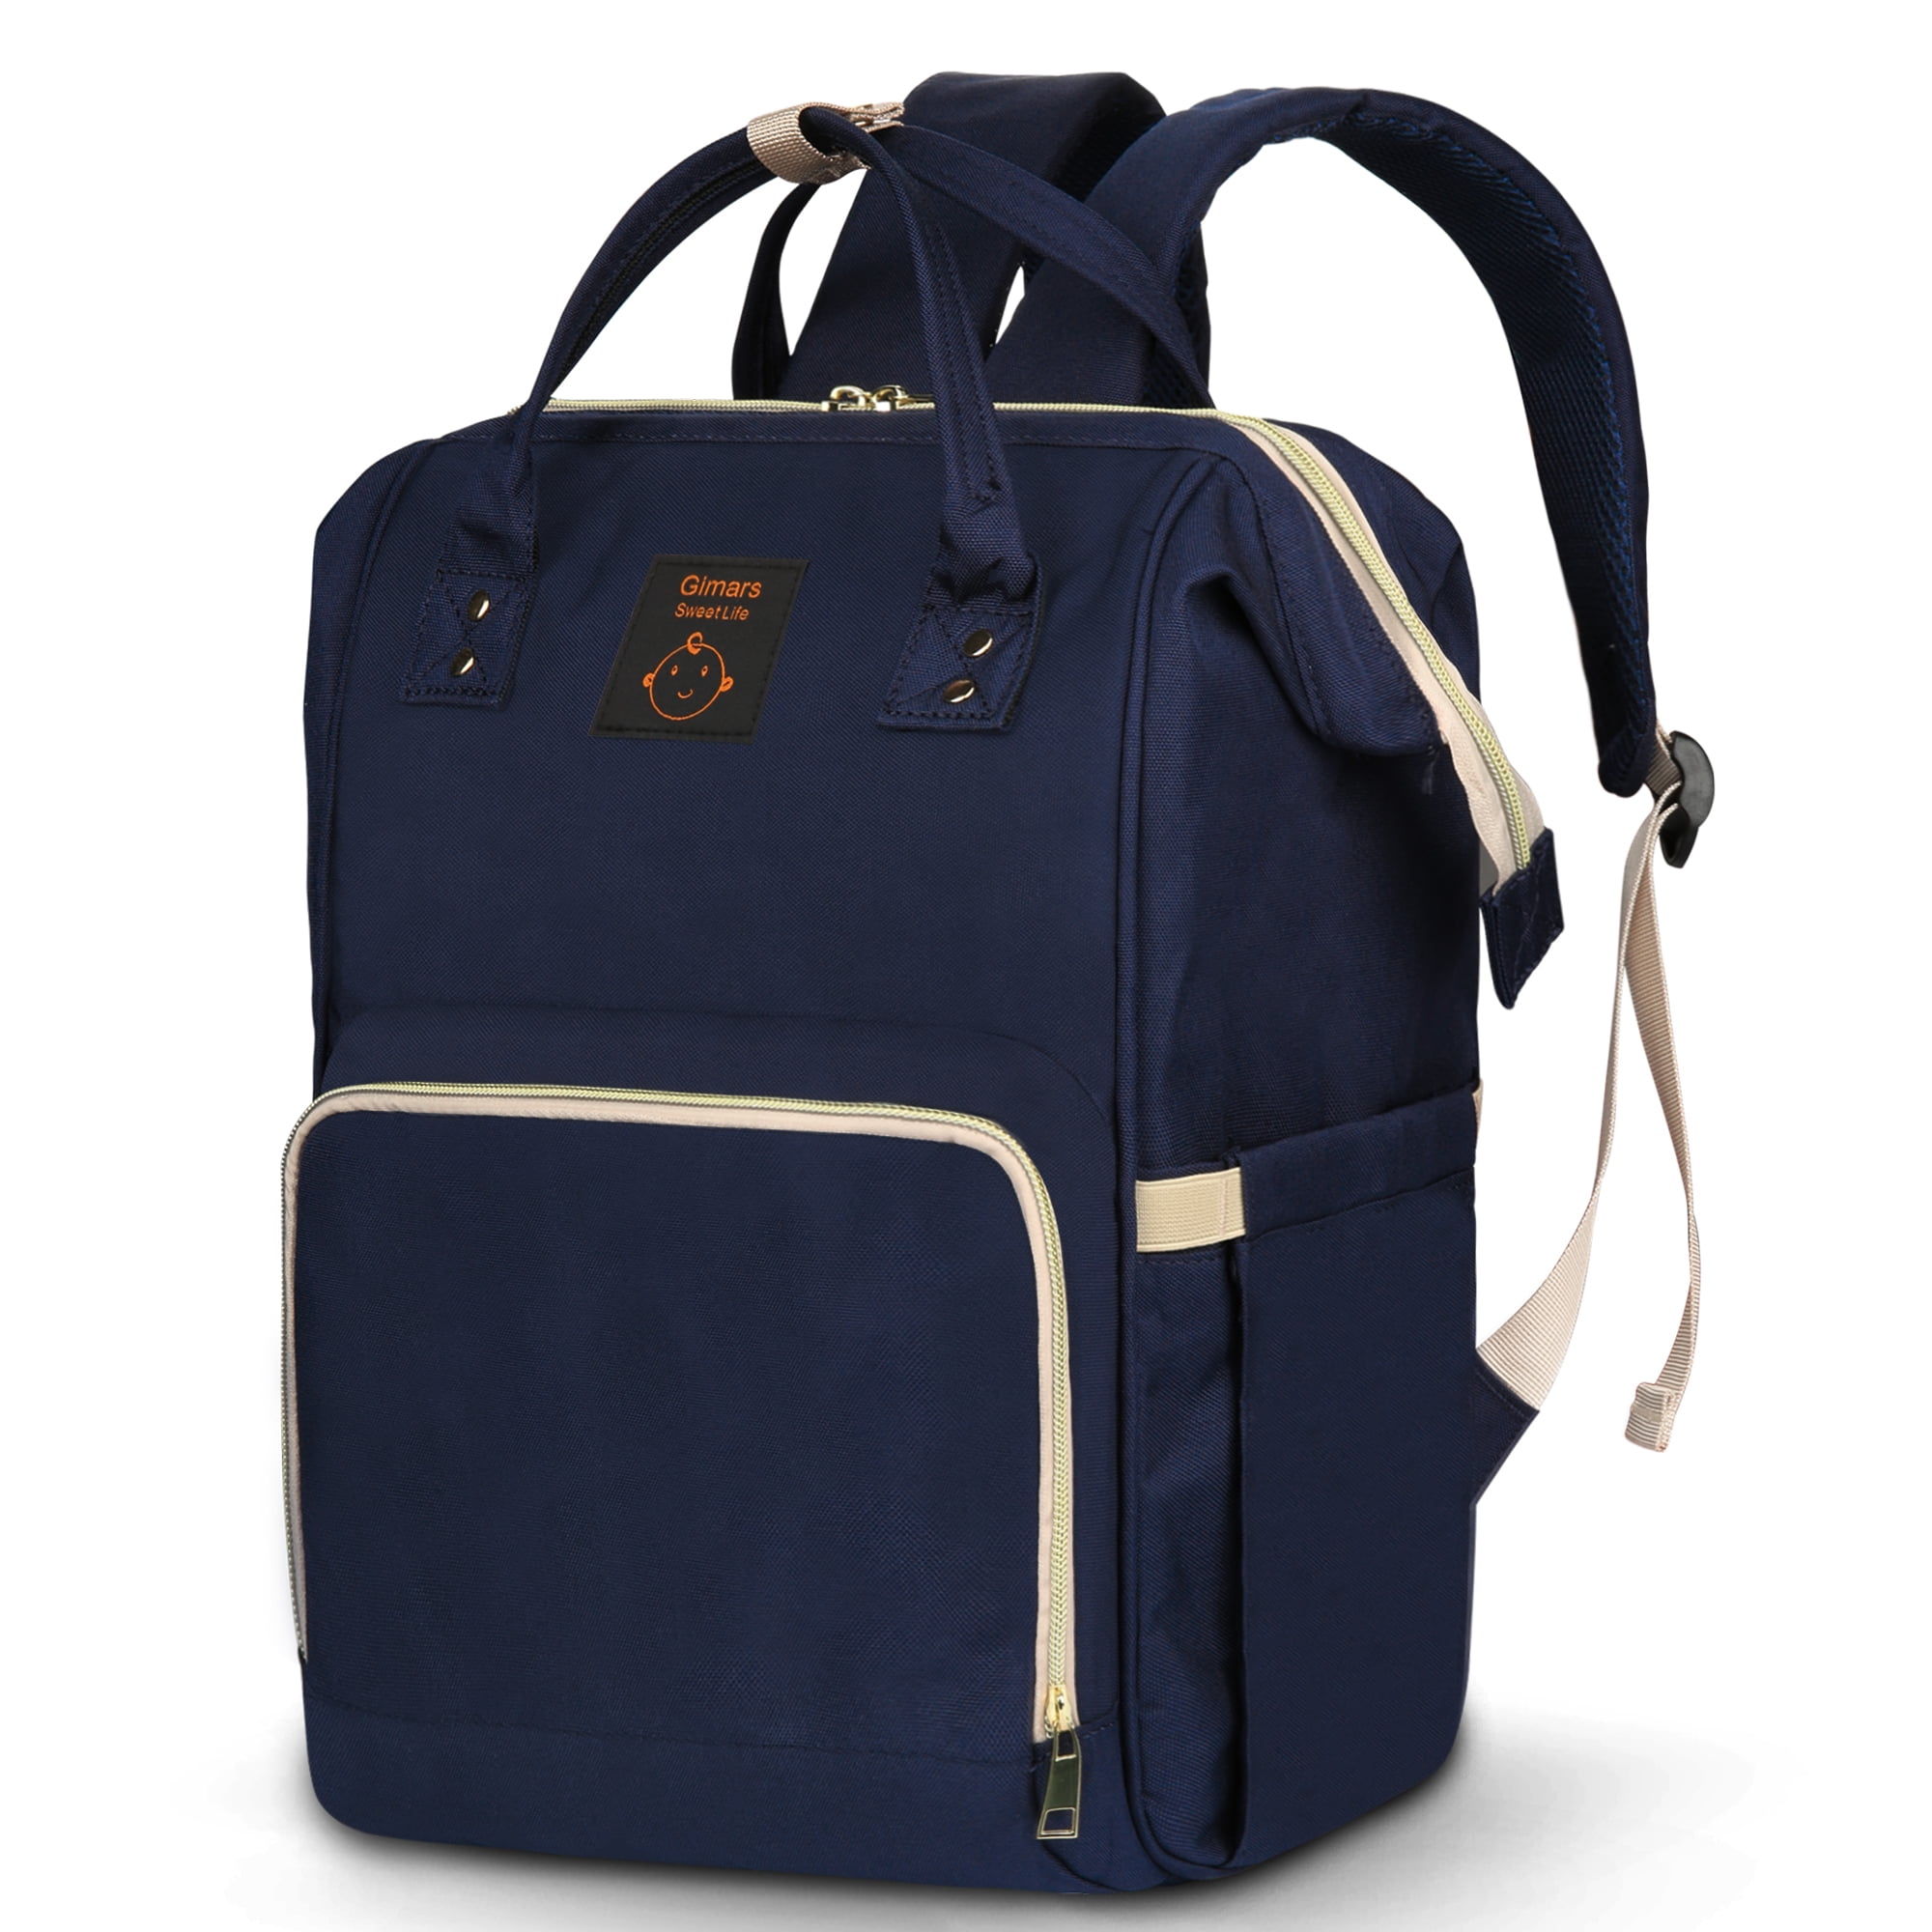 Gimars Diaper Bag Backpack, Large Capacity Travel Baby Backpack Bags ...